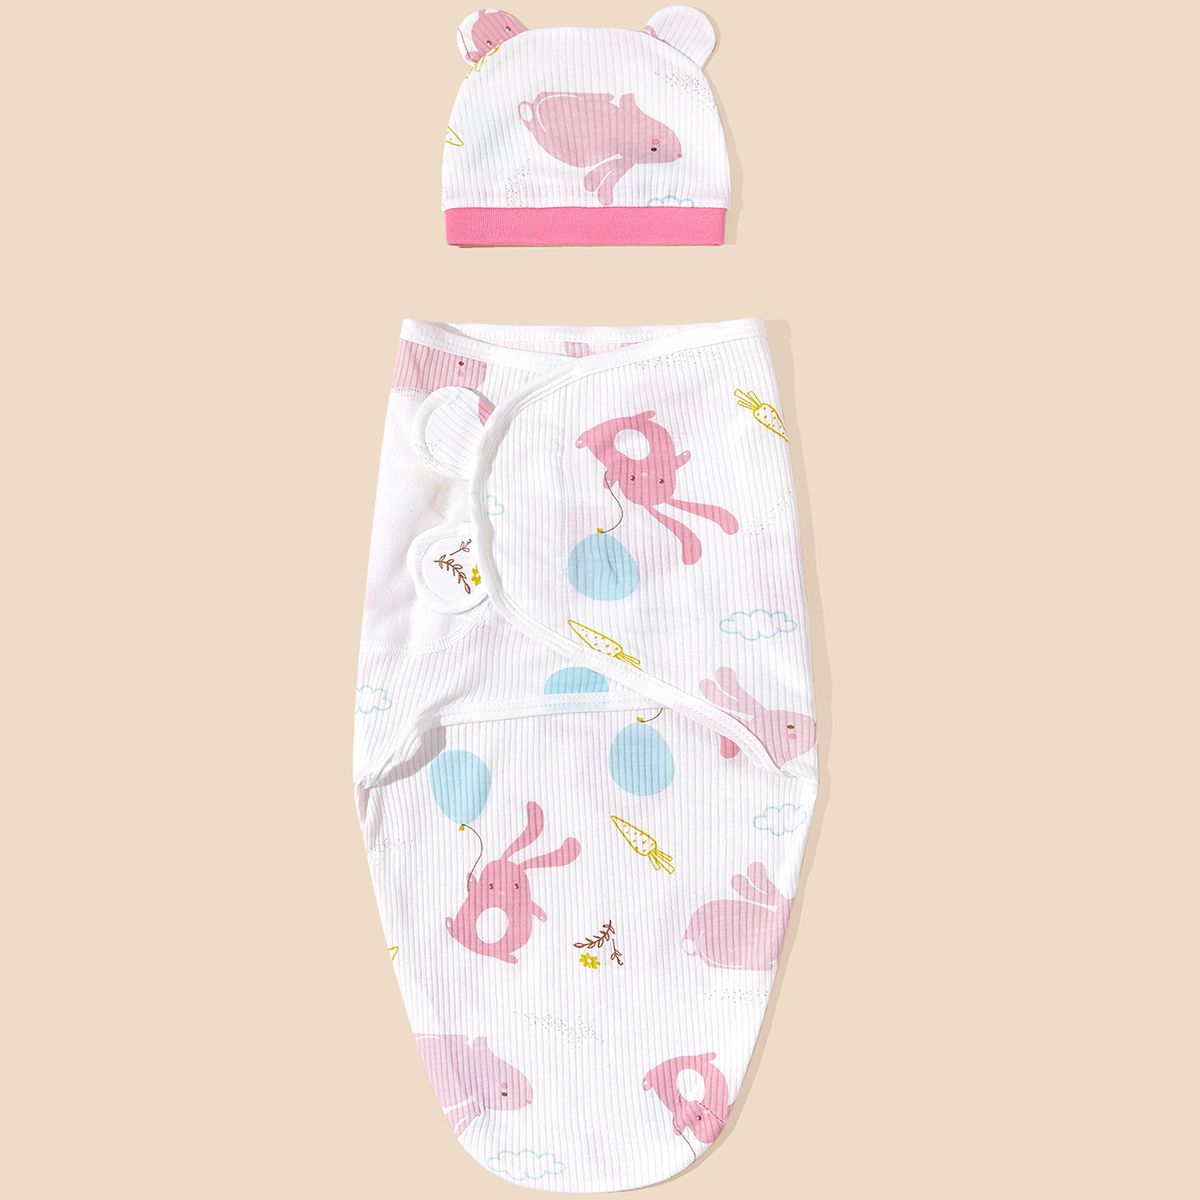 Unisex Cotton Sleeping Bag For Babies - Medium Thick With Anti-Kick Zipper Design